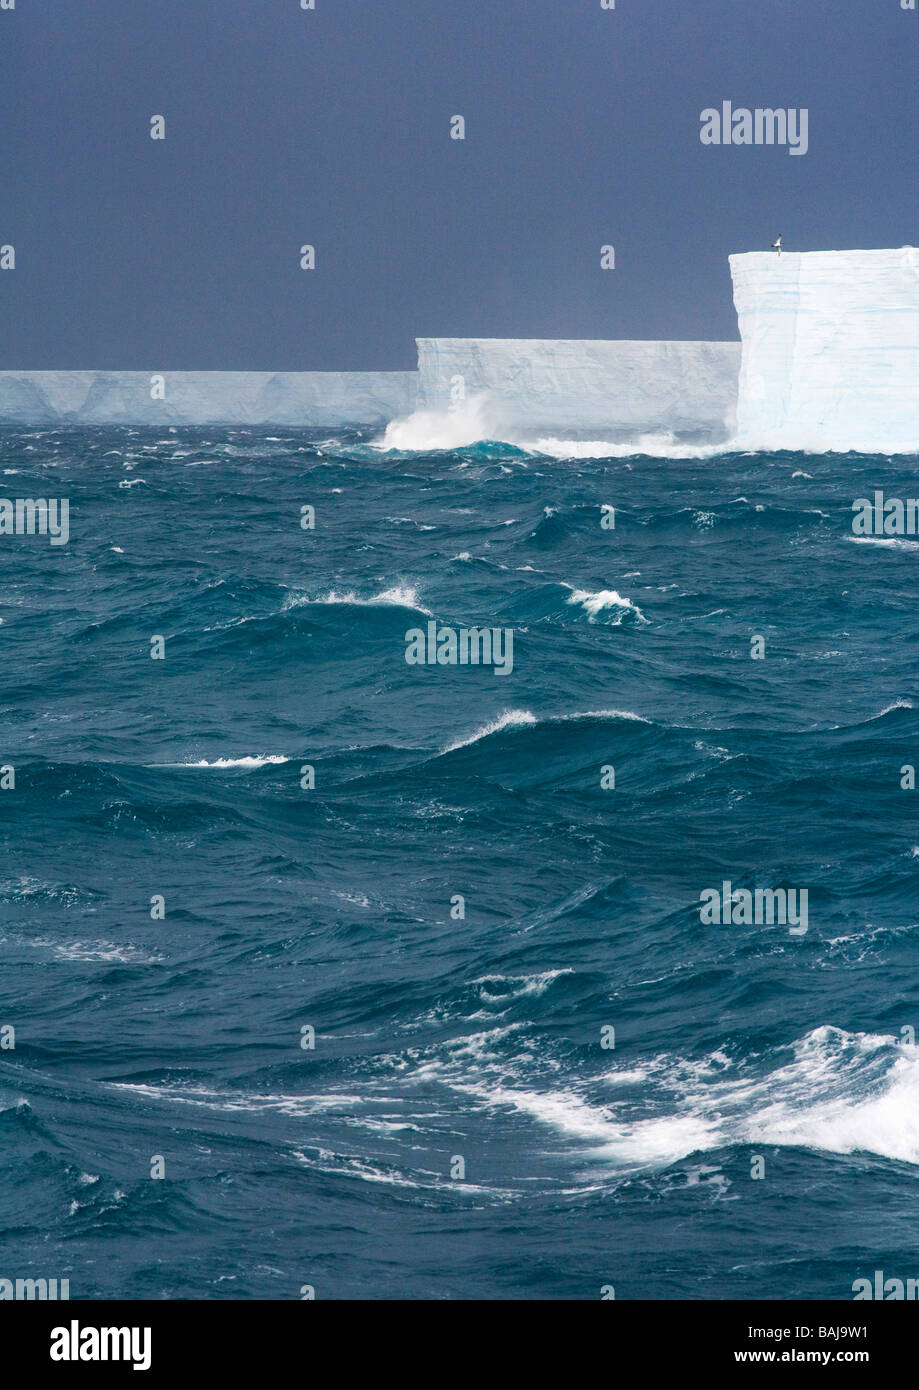 Rough seas batter blue tabular icebergs in the Southern Ocean Antarctica Stock Photo